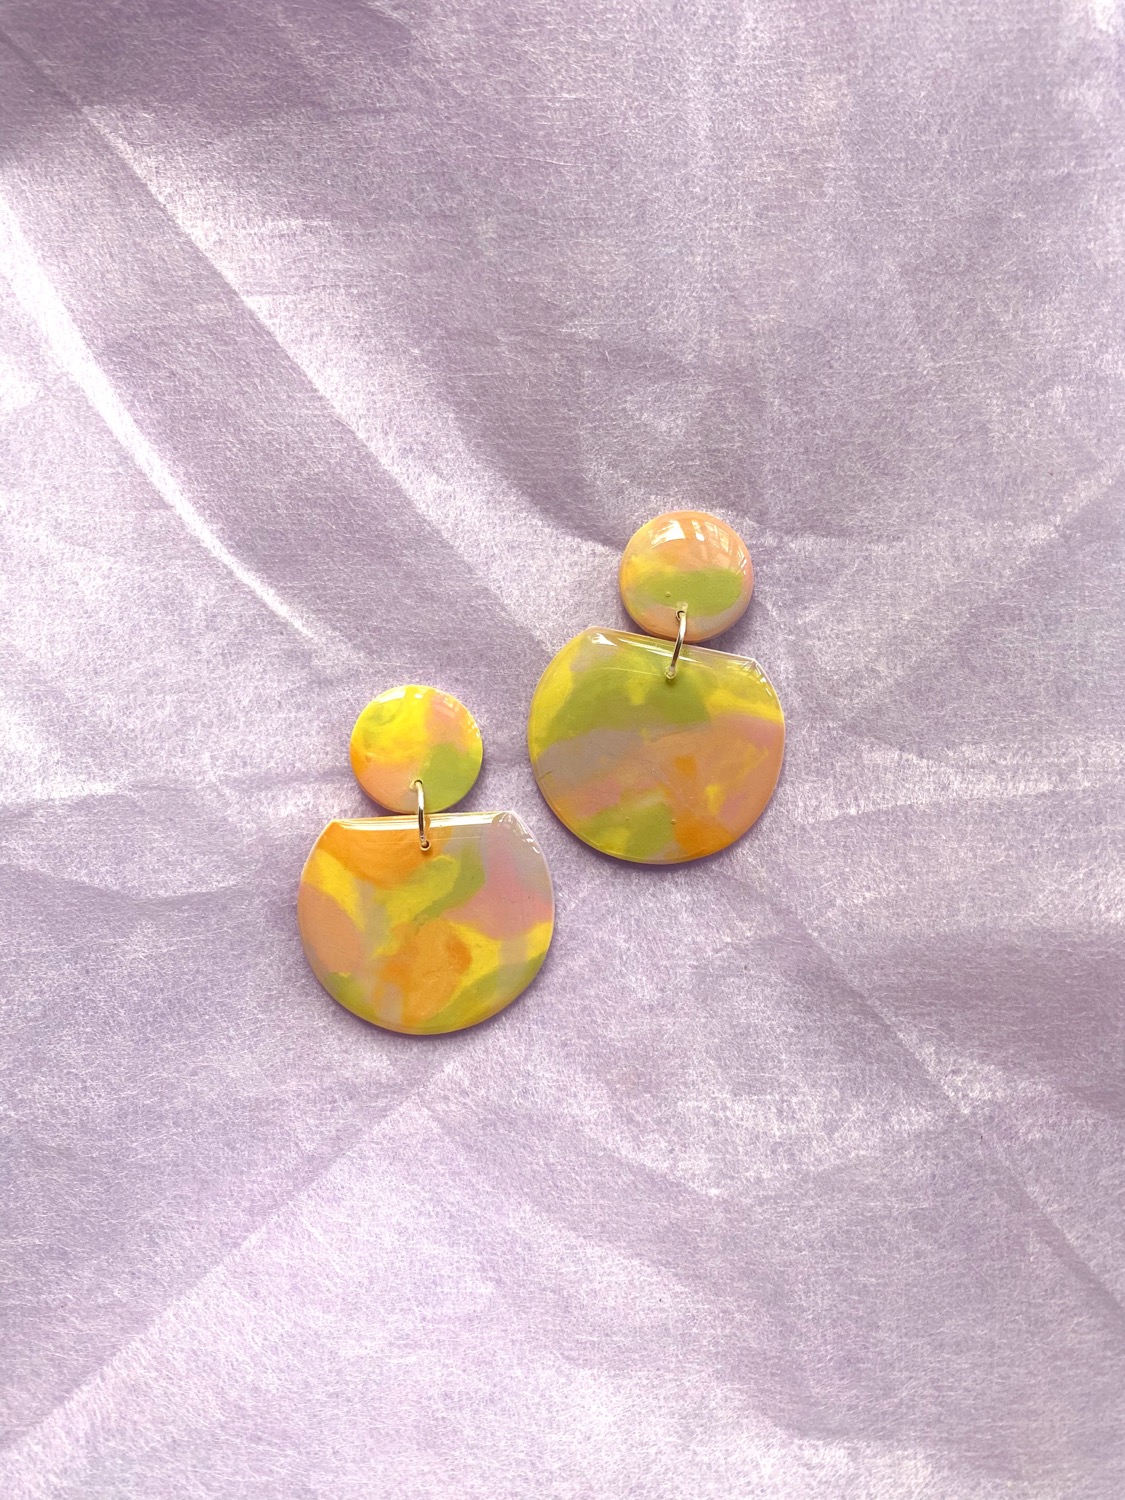 Fruity Pop - Kahlo Polymer Clay Earrings